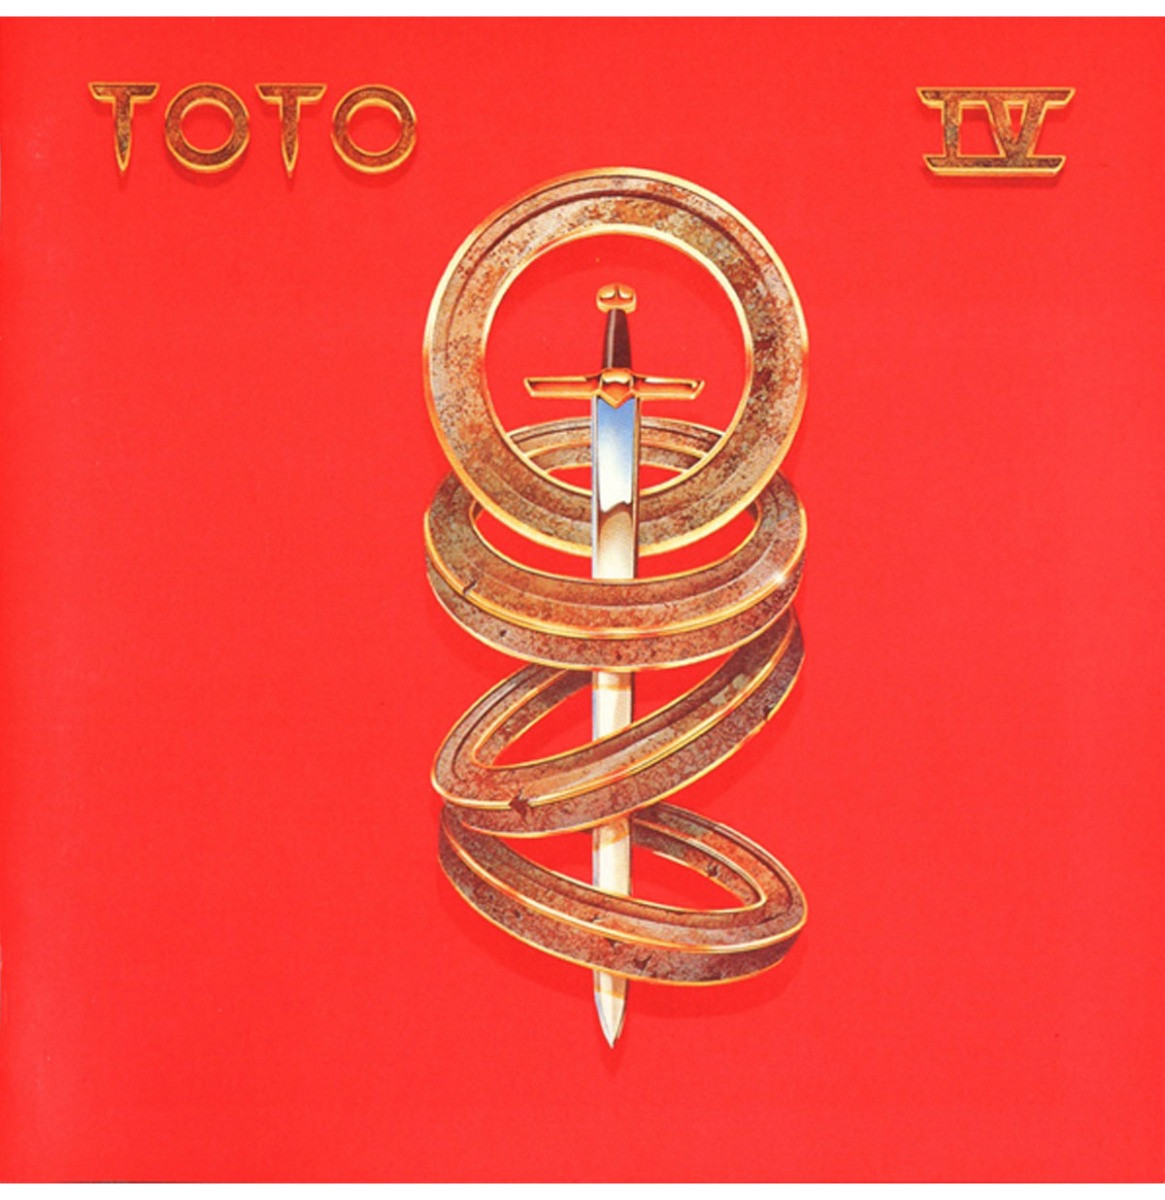 Toto - IV LP